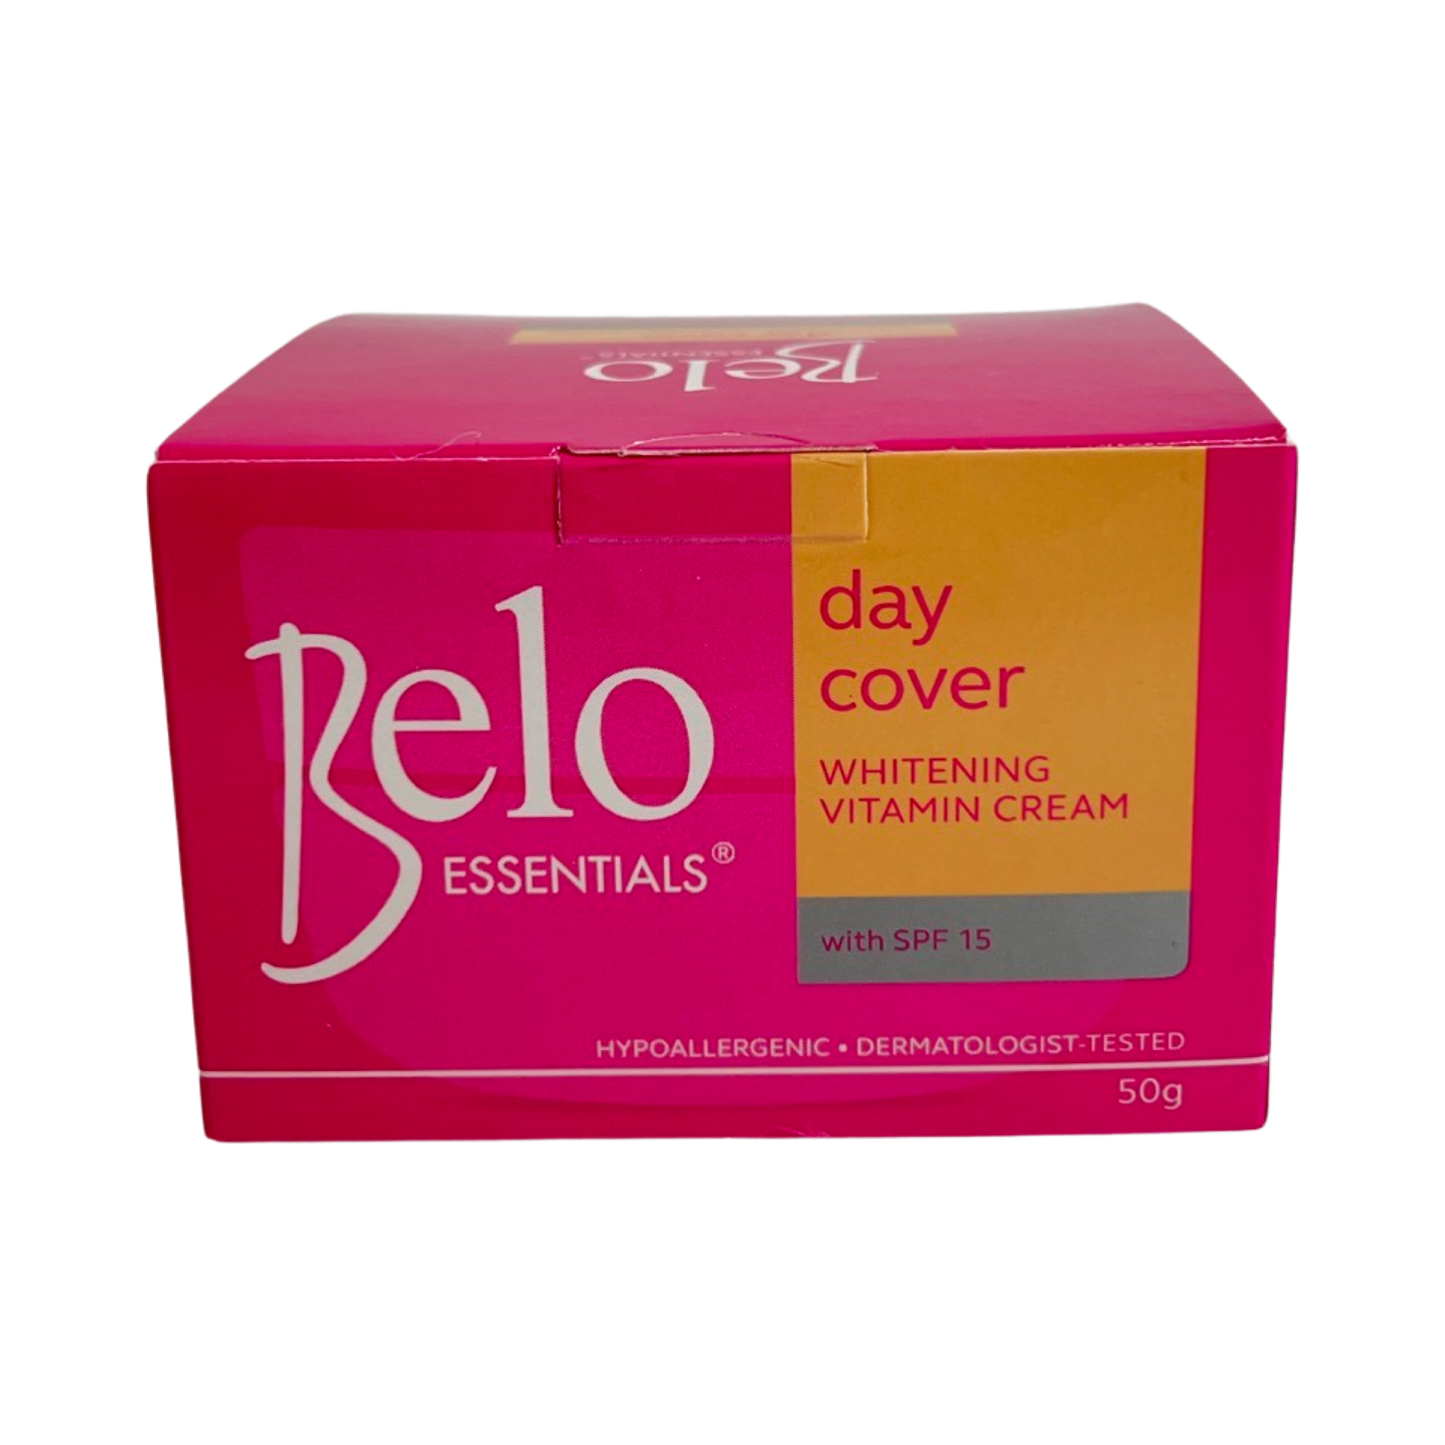 Belo Essentials Day Cover Whitening Vitamin Cream with SPF 15 50g